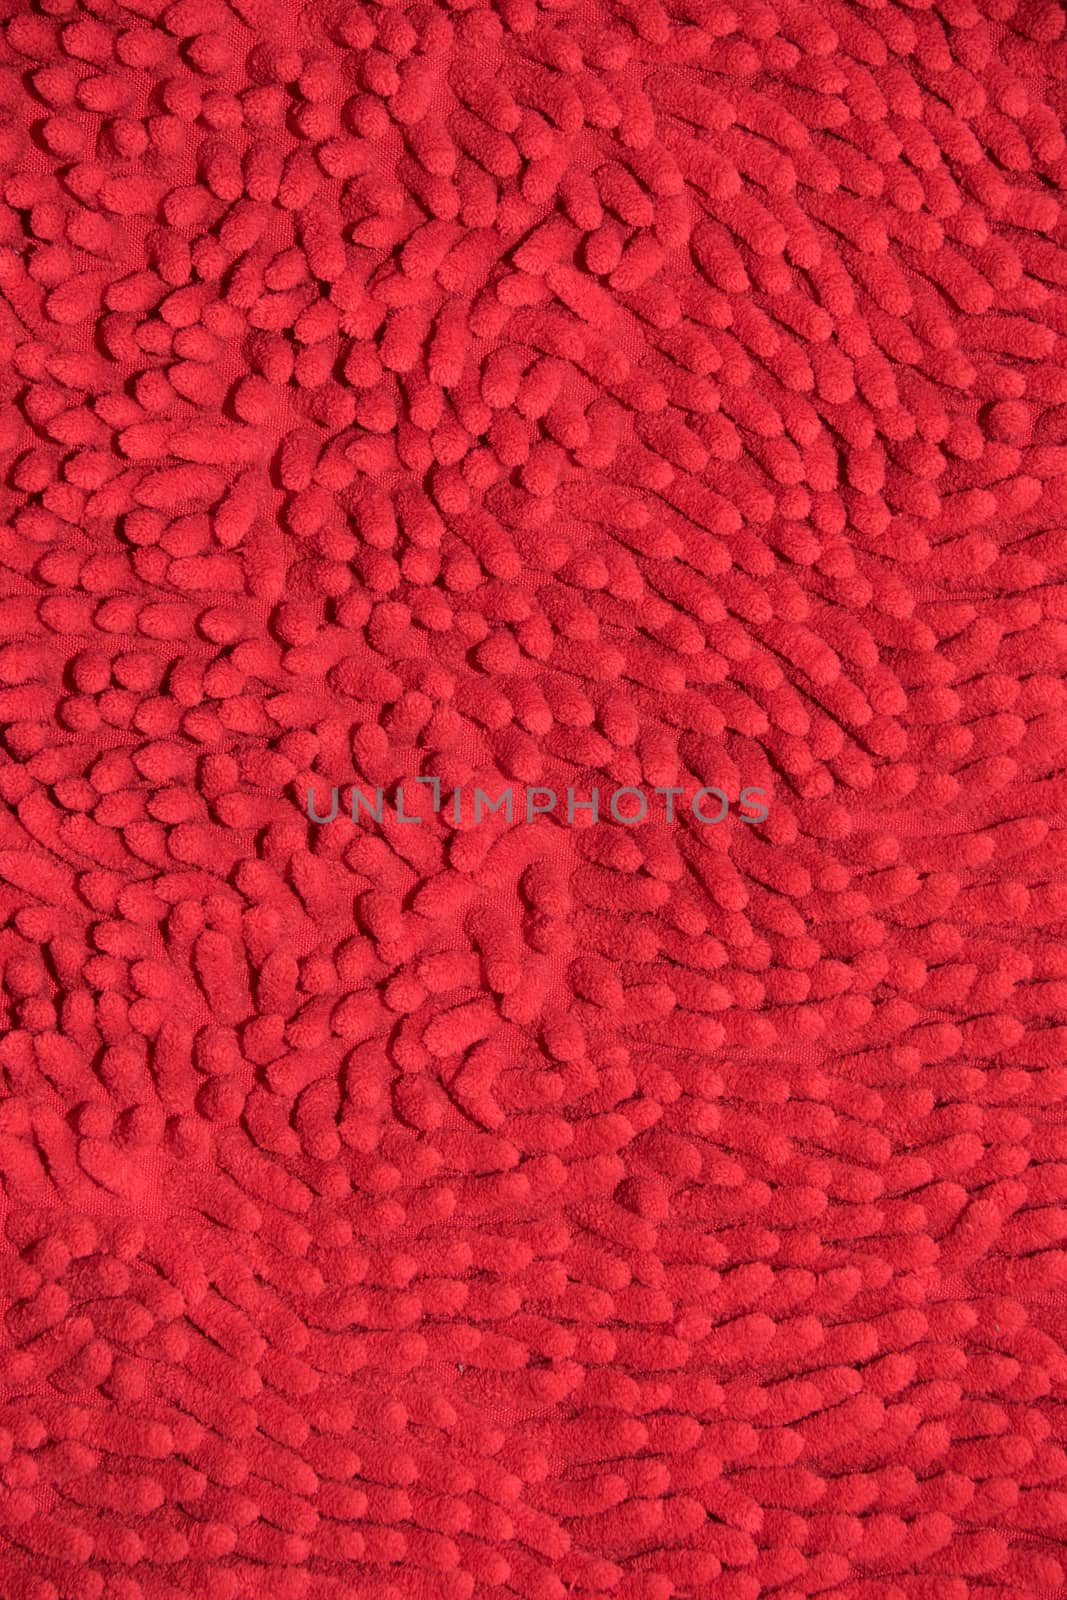 Red cloth mat by wattanaphob